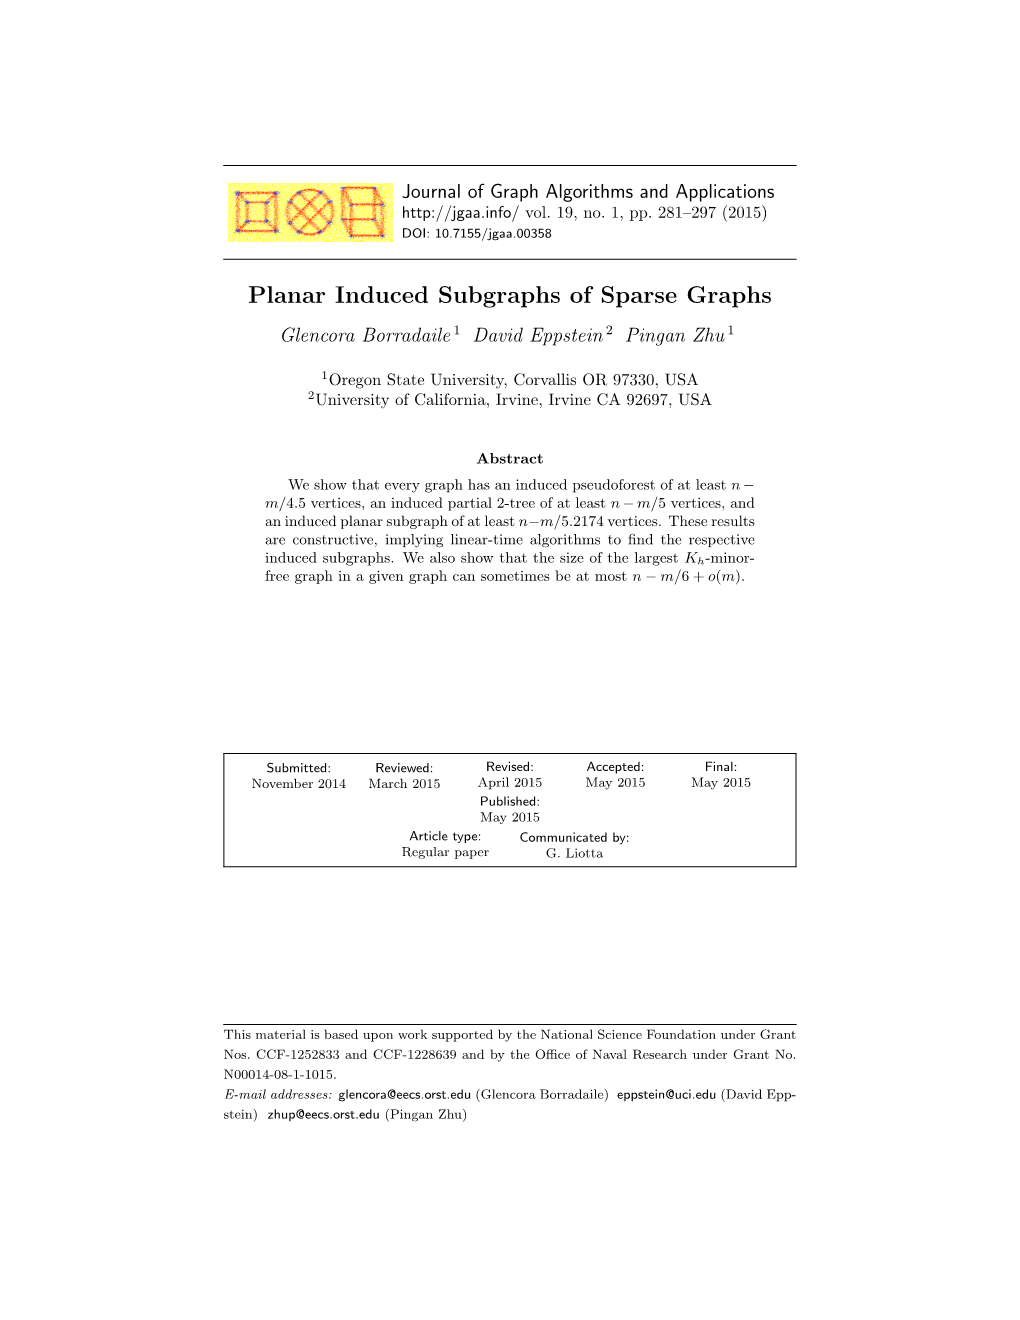 Planar Induced Subgraphs of Sparse Graphs Glencora Borradaile 1 David Eppstein 2 Pingan Zhu 1